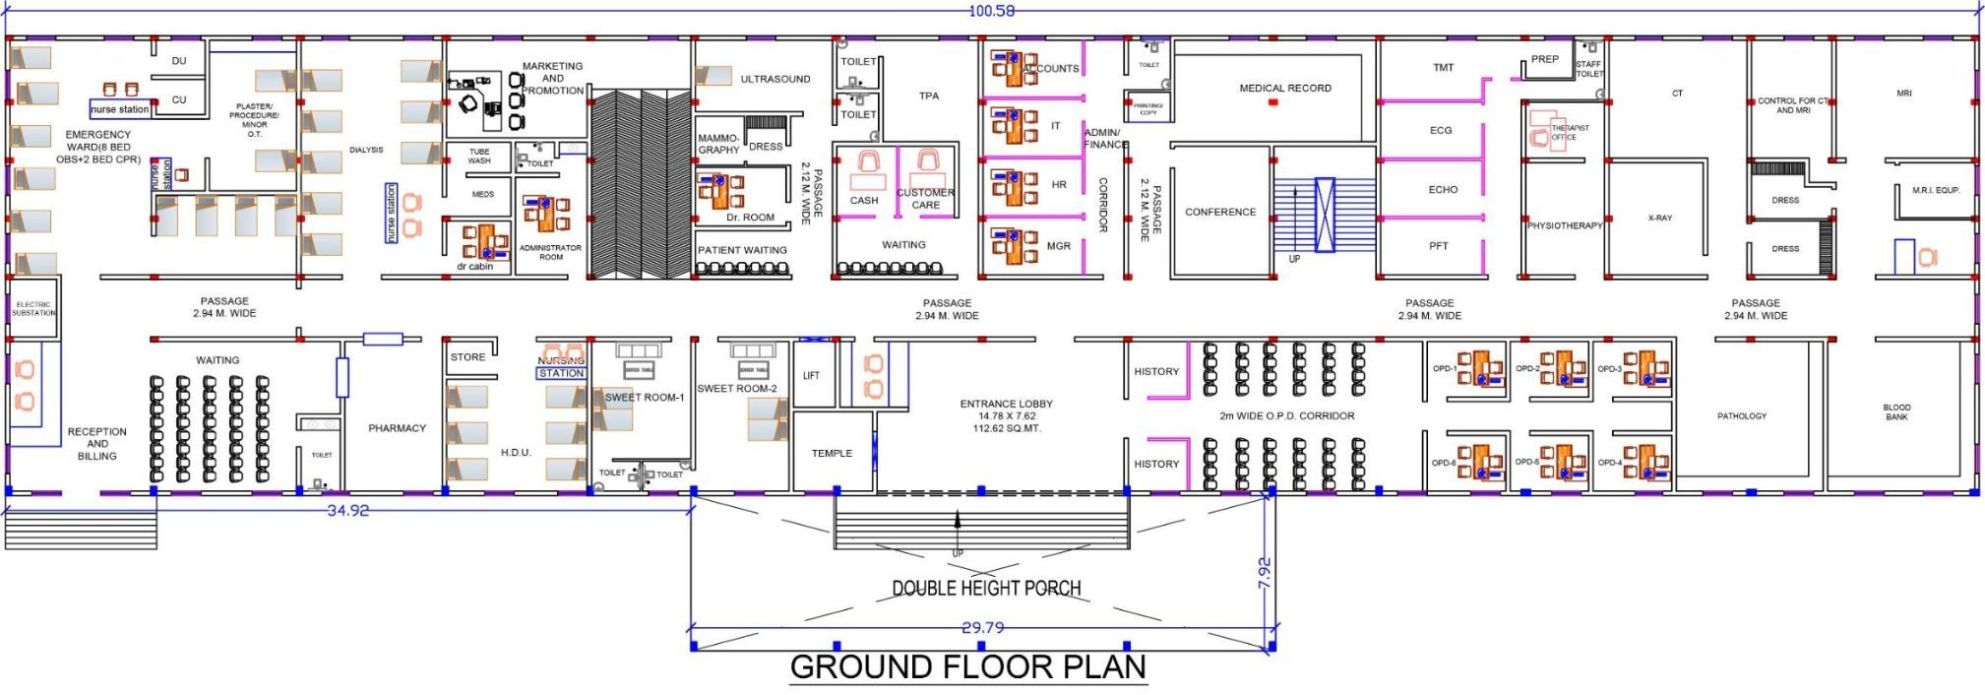 architecture-hospital-ground-plan